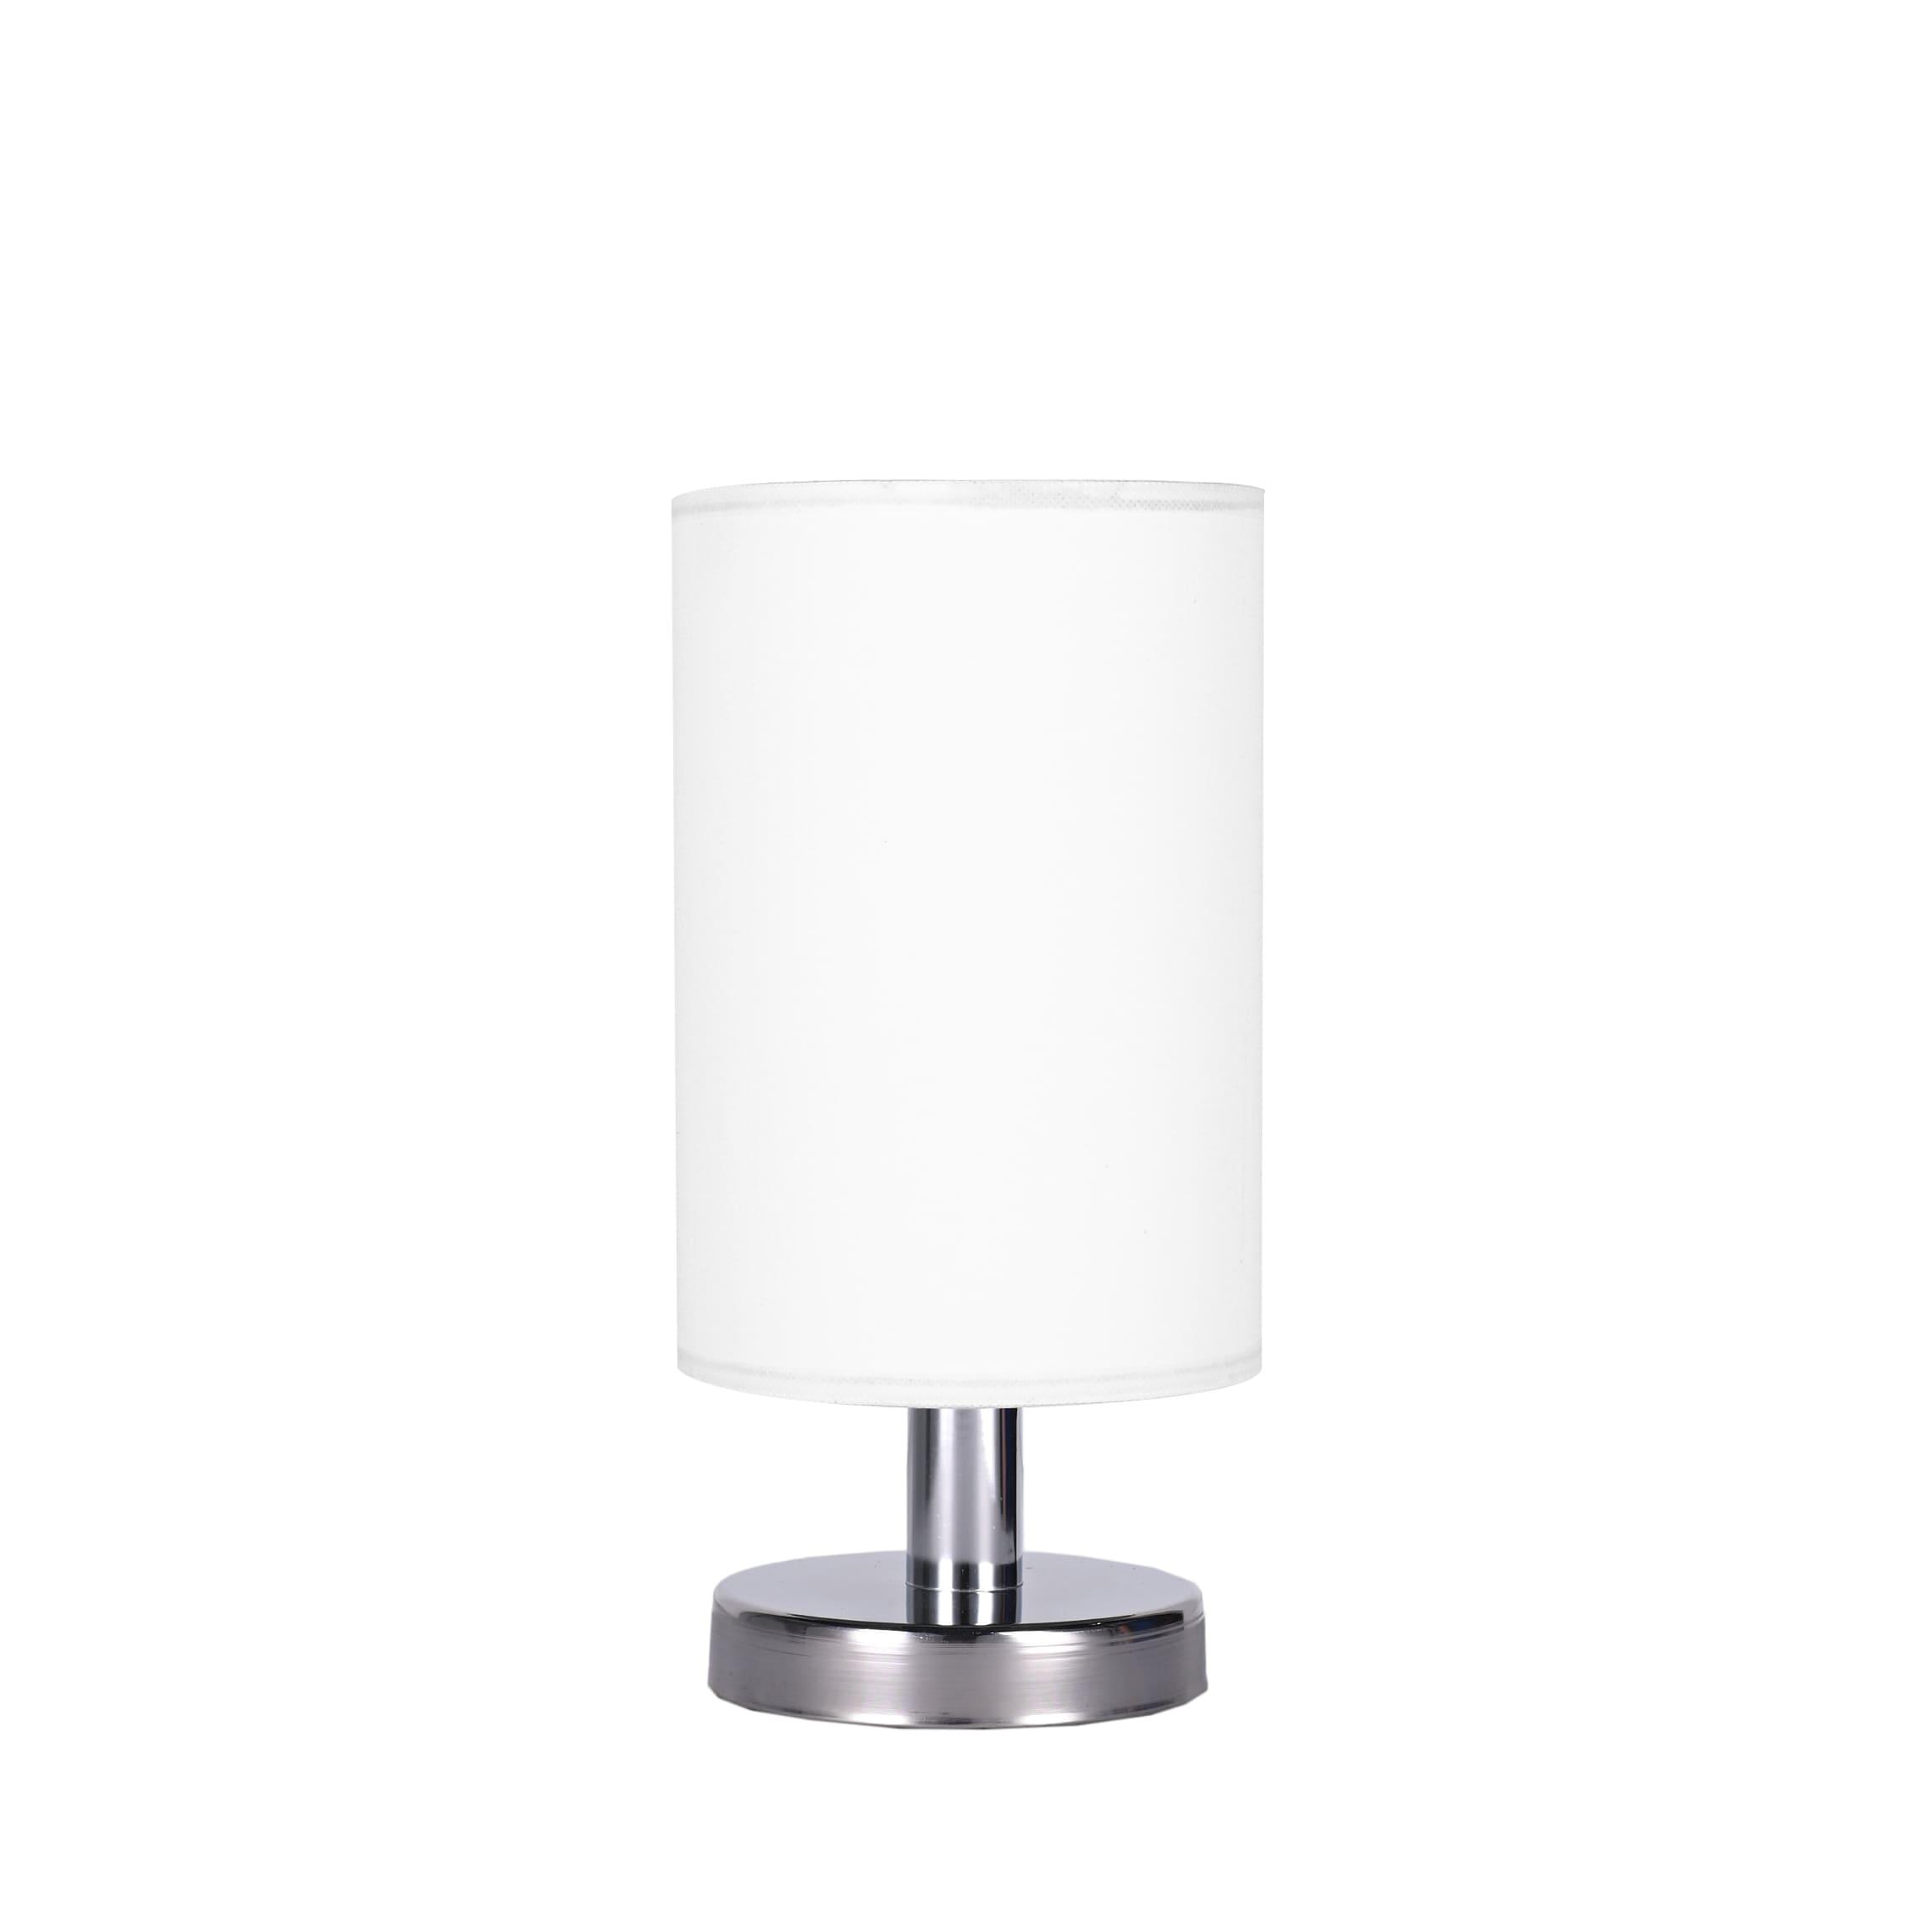 El Rawda White Modern Desk Lamp 30×30 cm - 1 Lamp - RL-TL-B-011